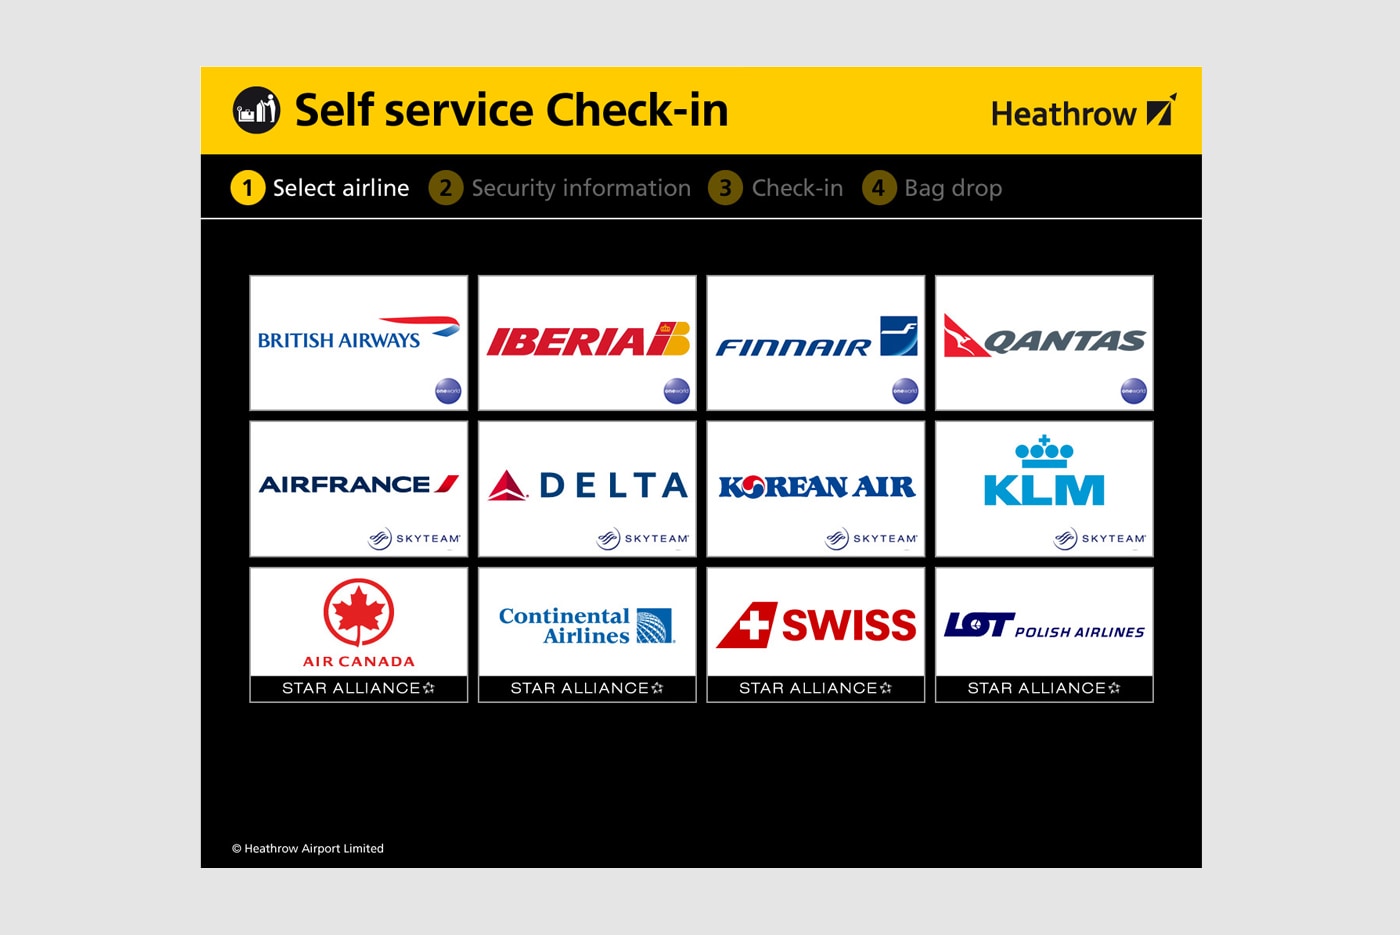 Heathrow’s self service check-in